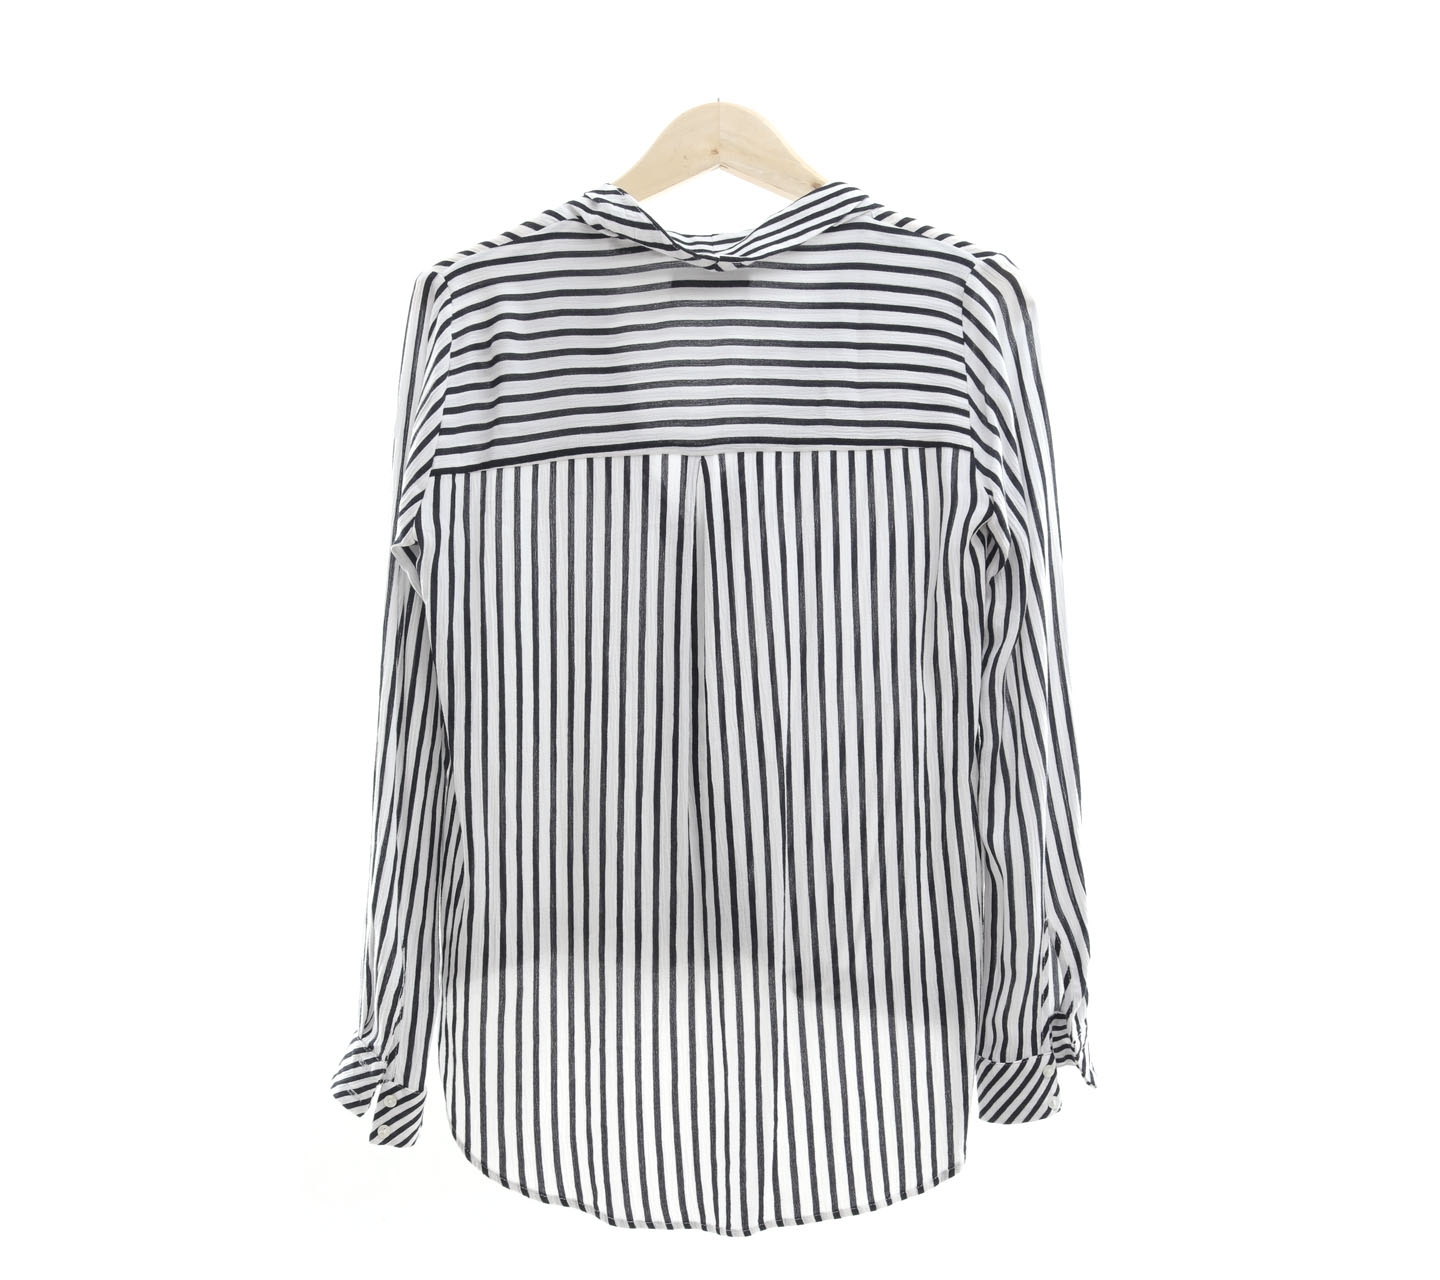 Zara Black & White Striped Blouse